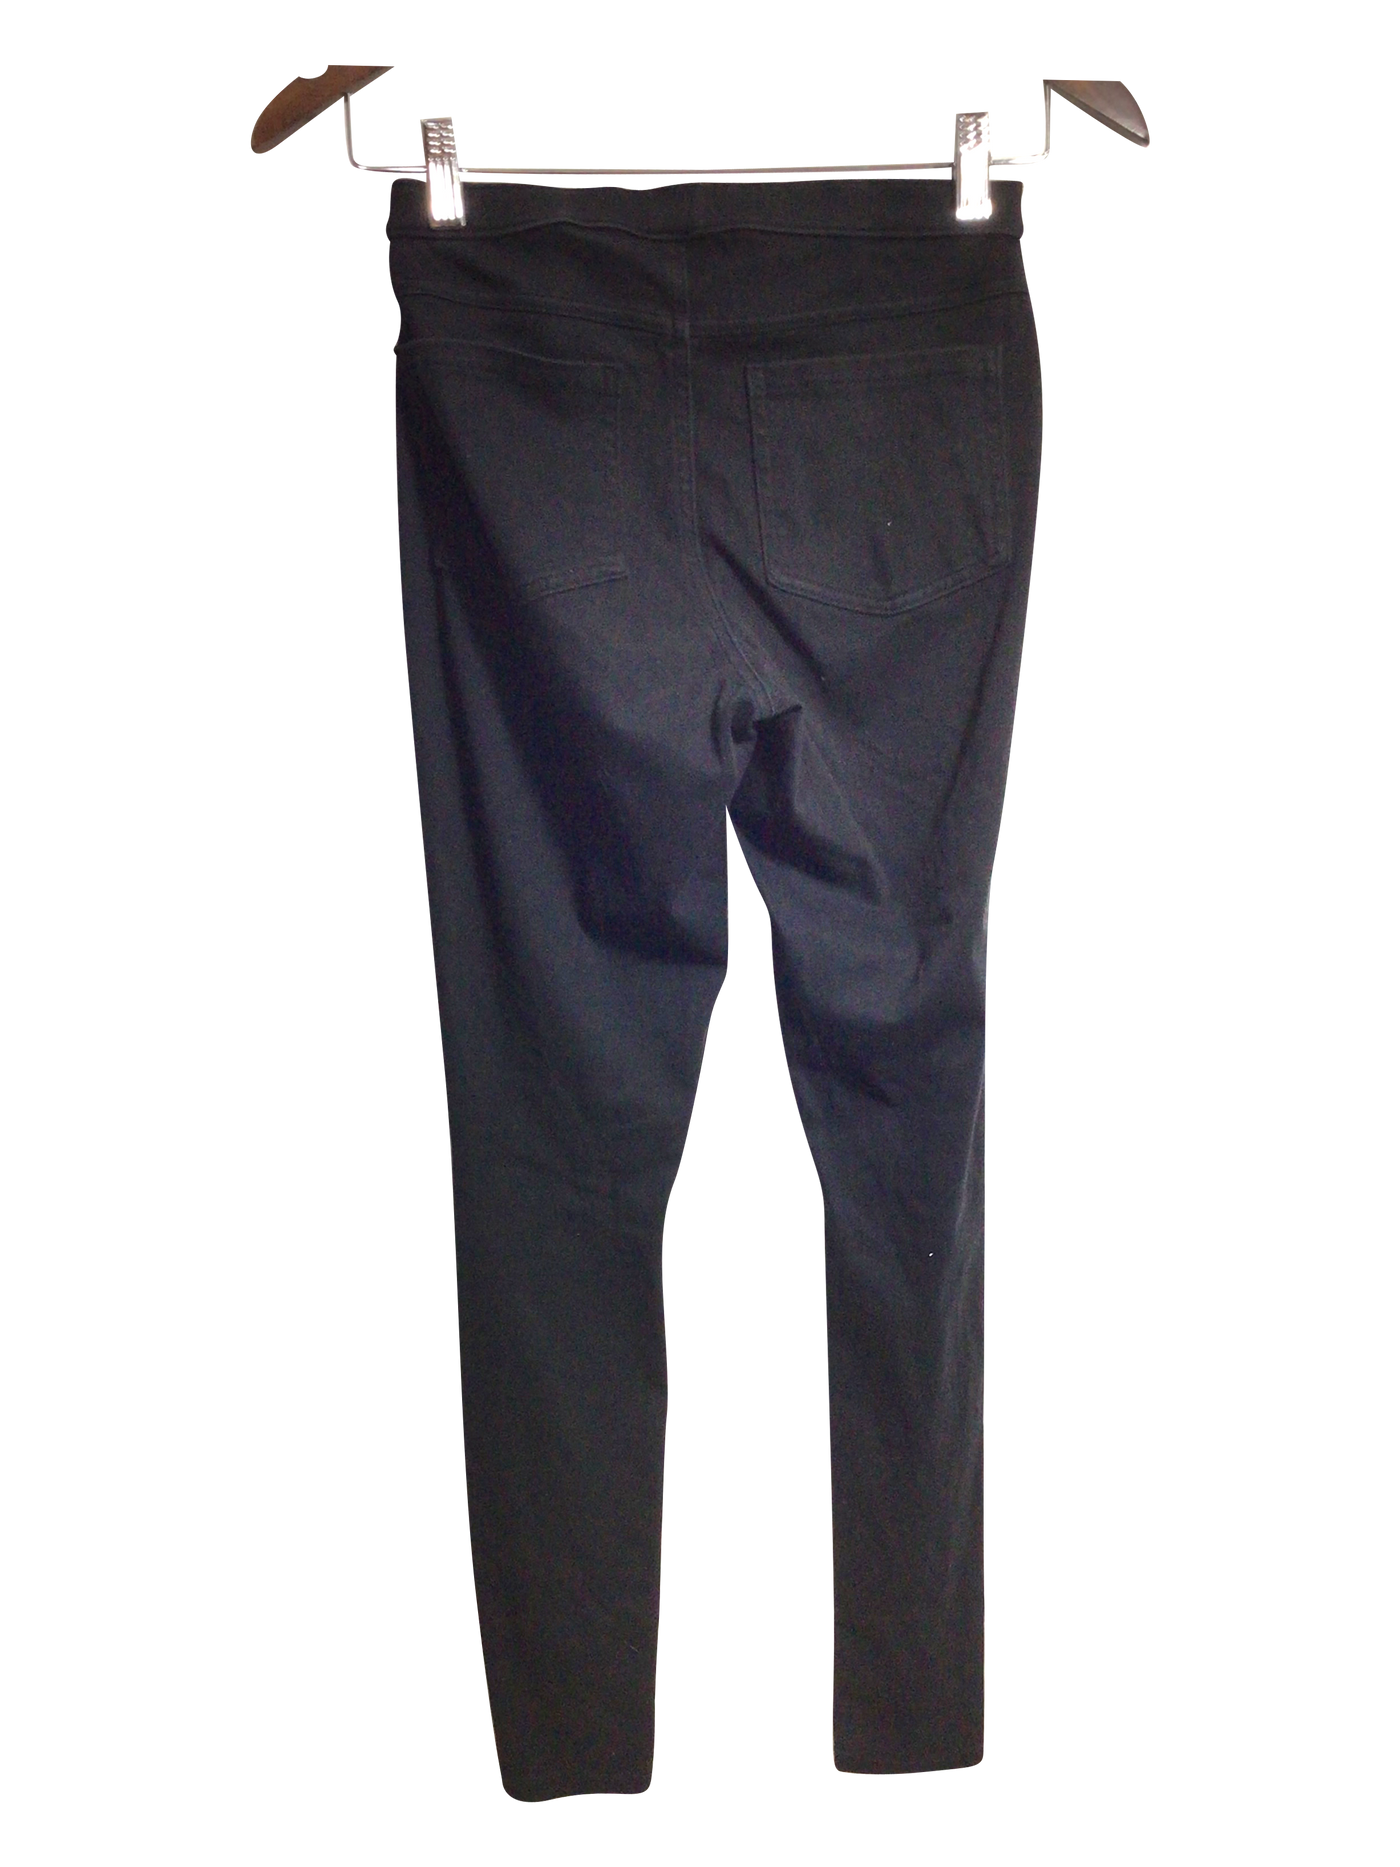 HUE Women Work Pants Regular fit in Black - Size XS | 8.44 $ KOOP